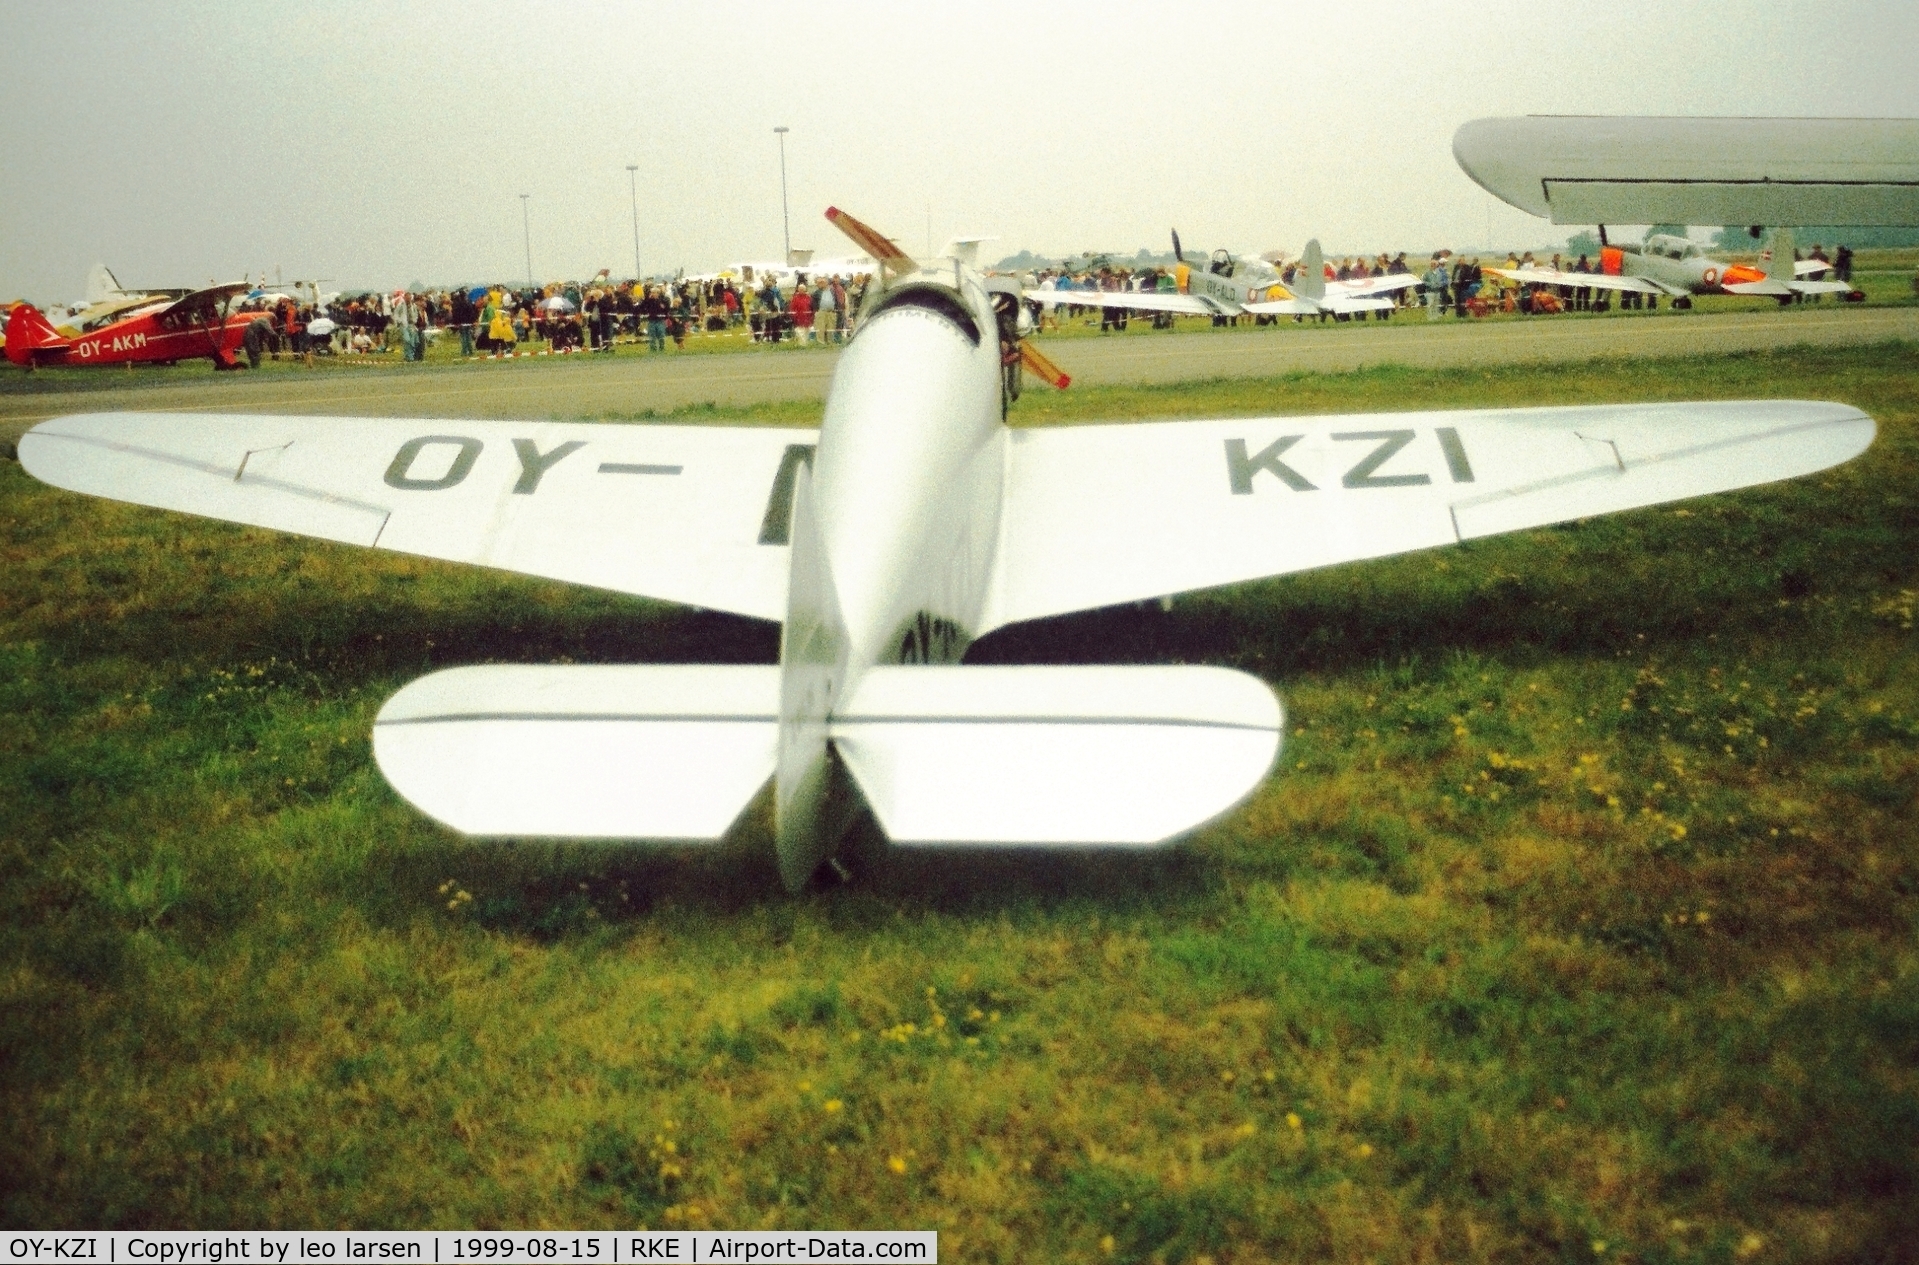 OY-KZI, 1986 SAI KZ I Mod Replica C/N 8605-2, Roskilde Air Show 15.8.1999